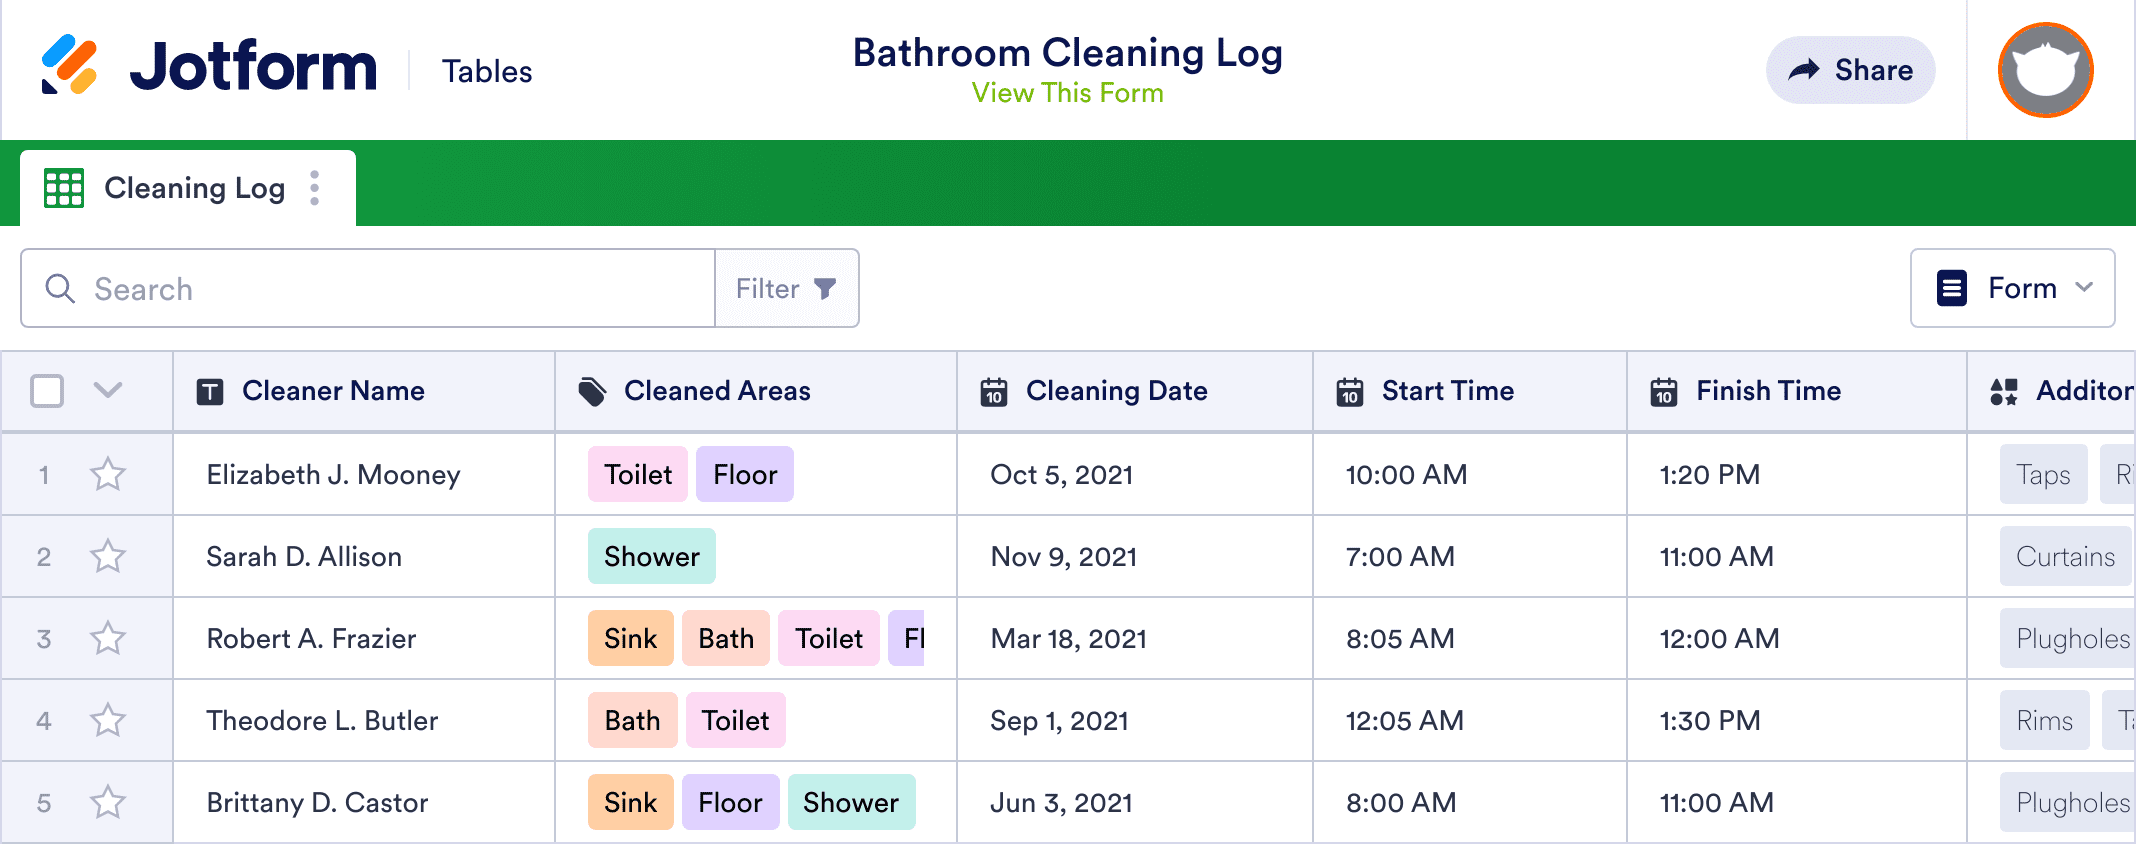 Bathroom Cleaning Log